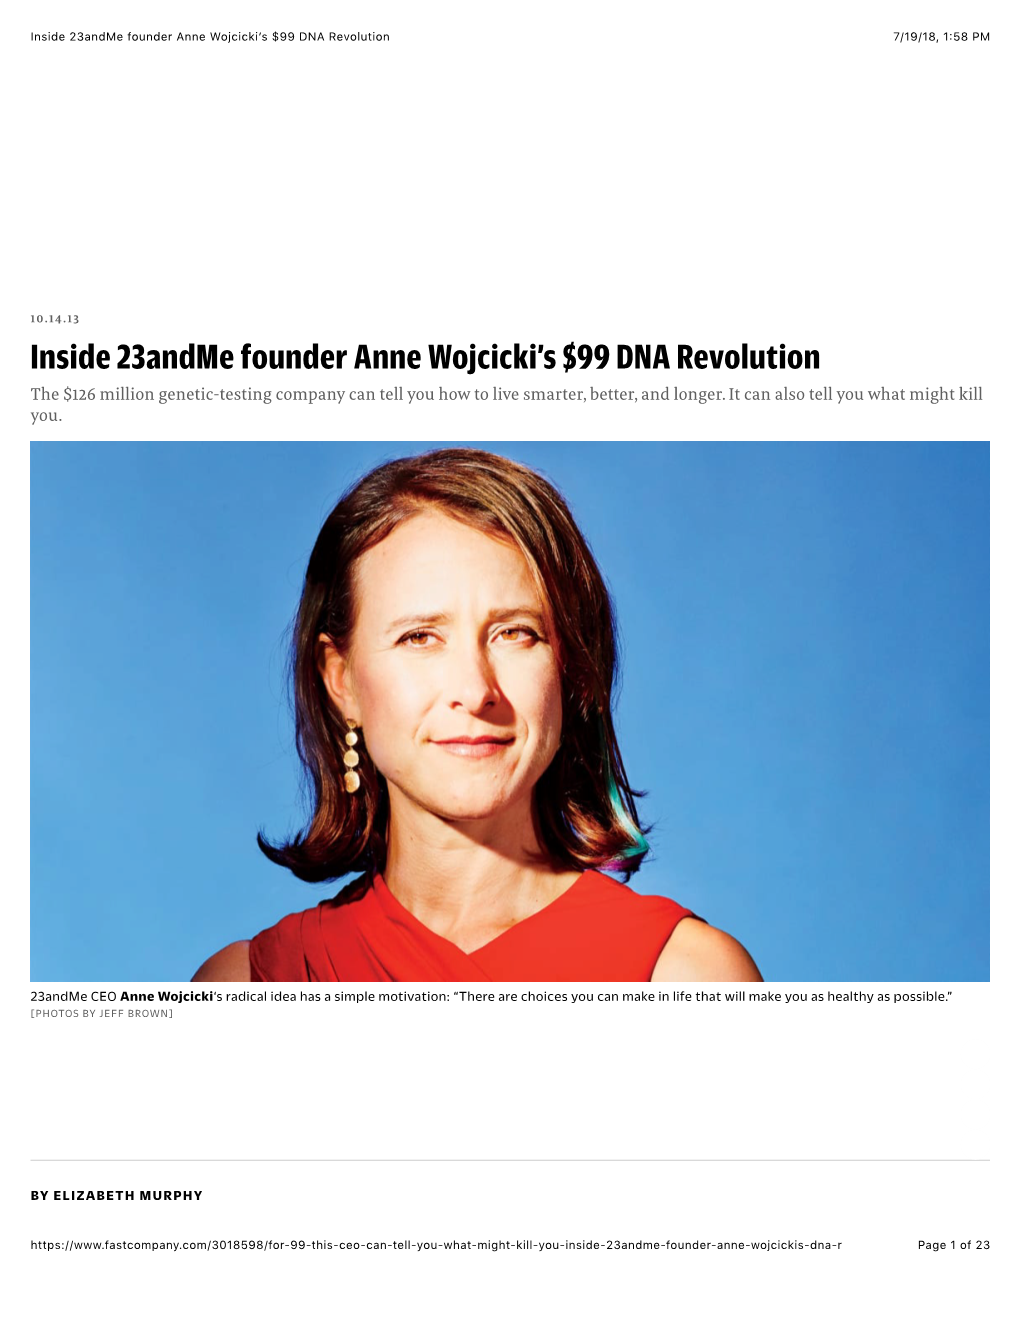 Inside 23Andme Founder Anne Wojcicki's $99 DNA Revolution